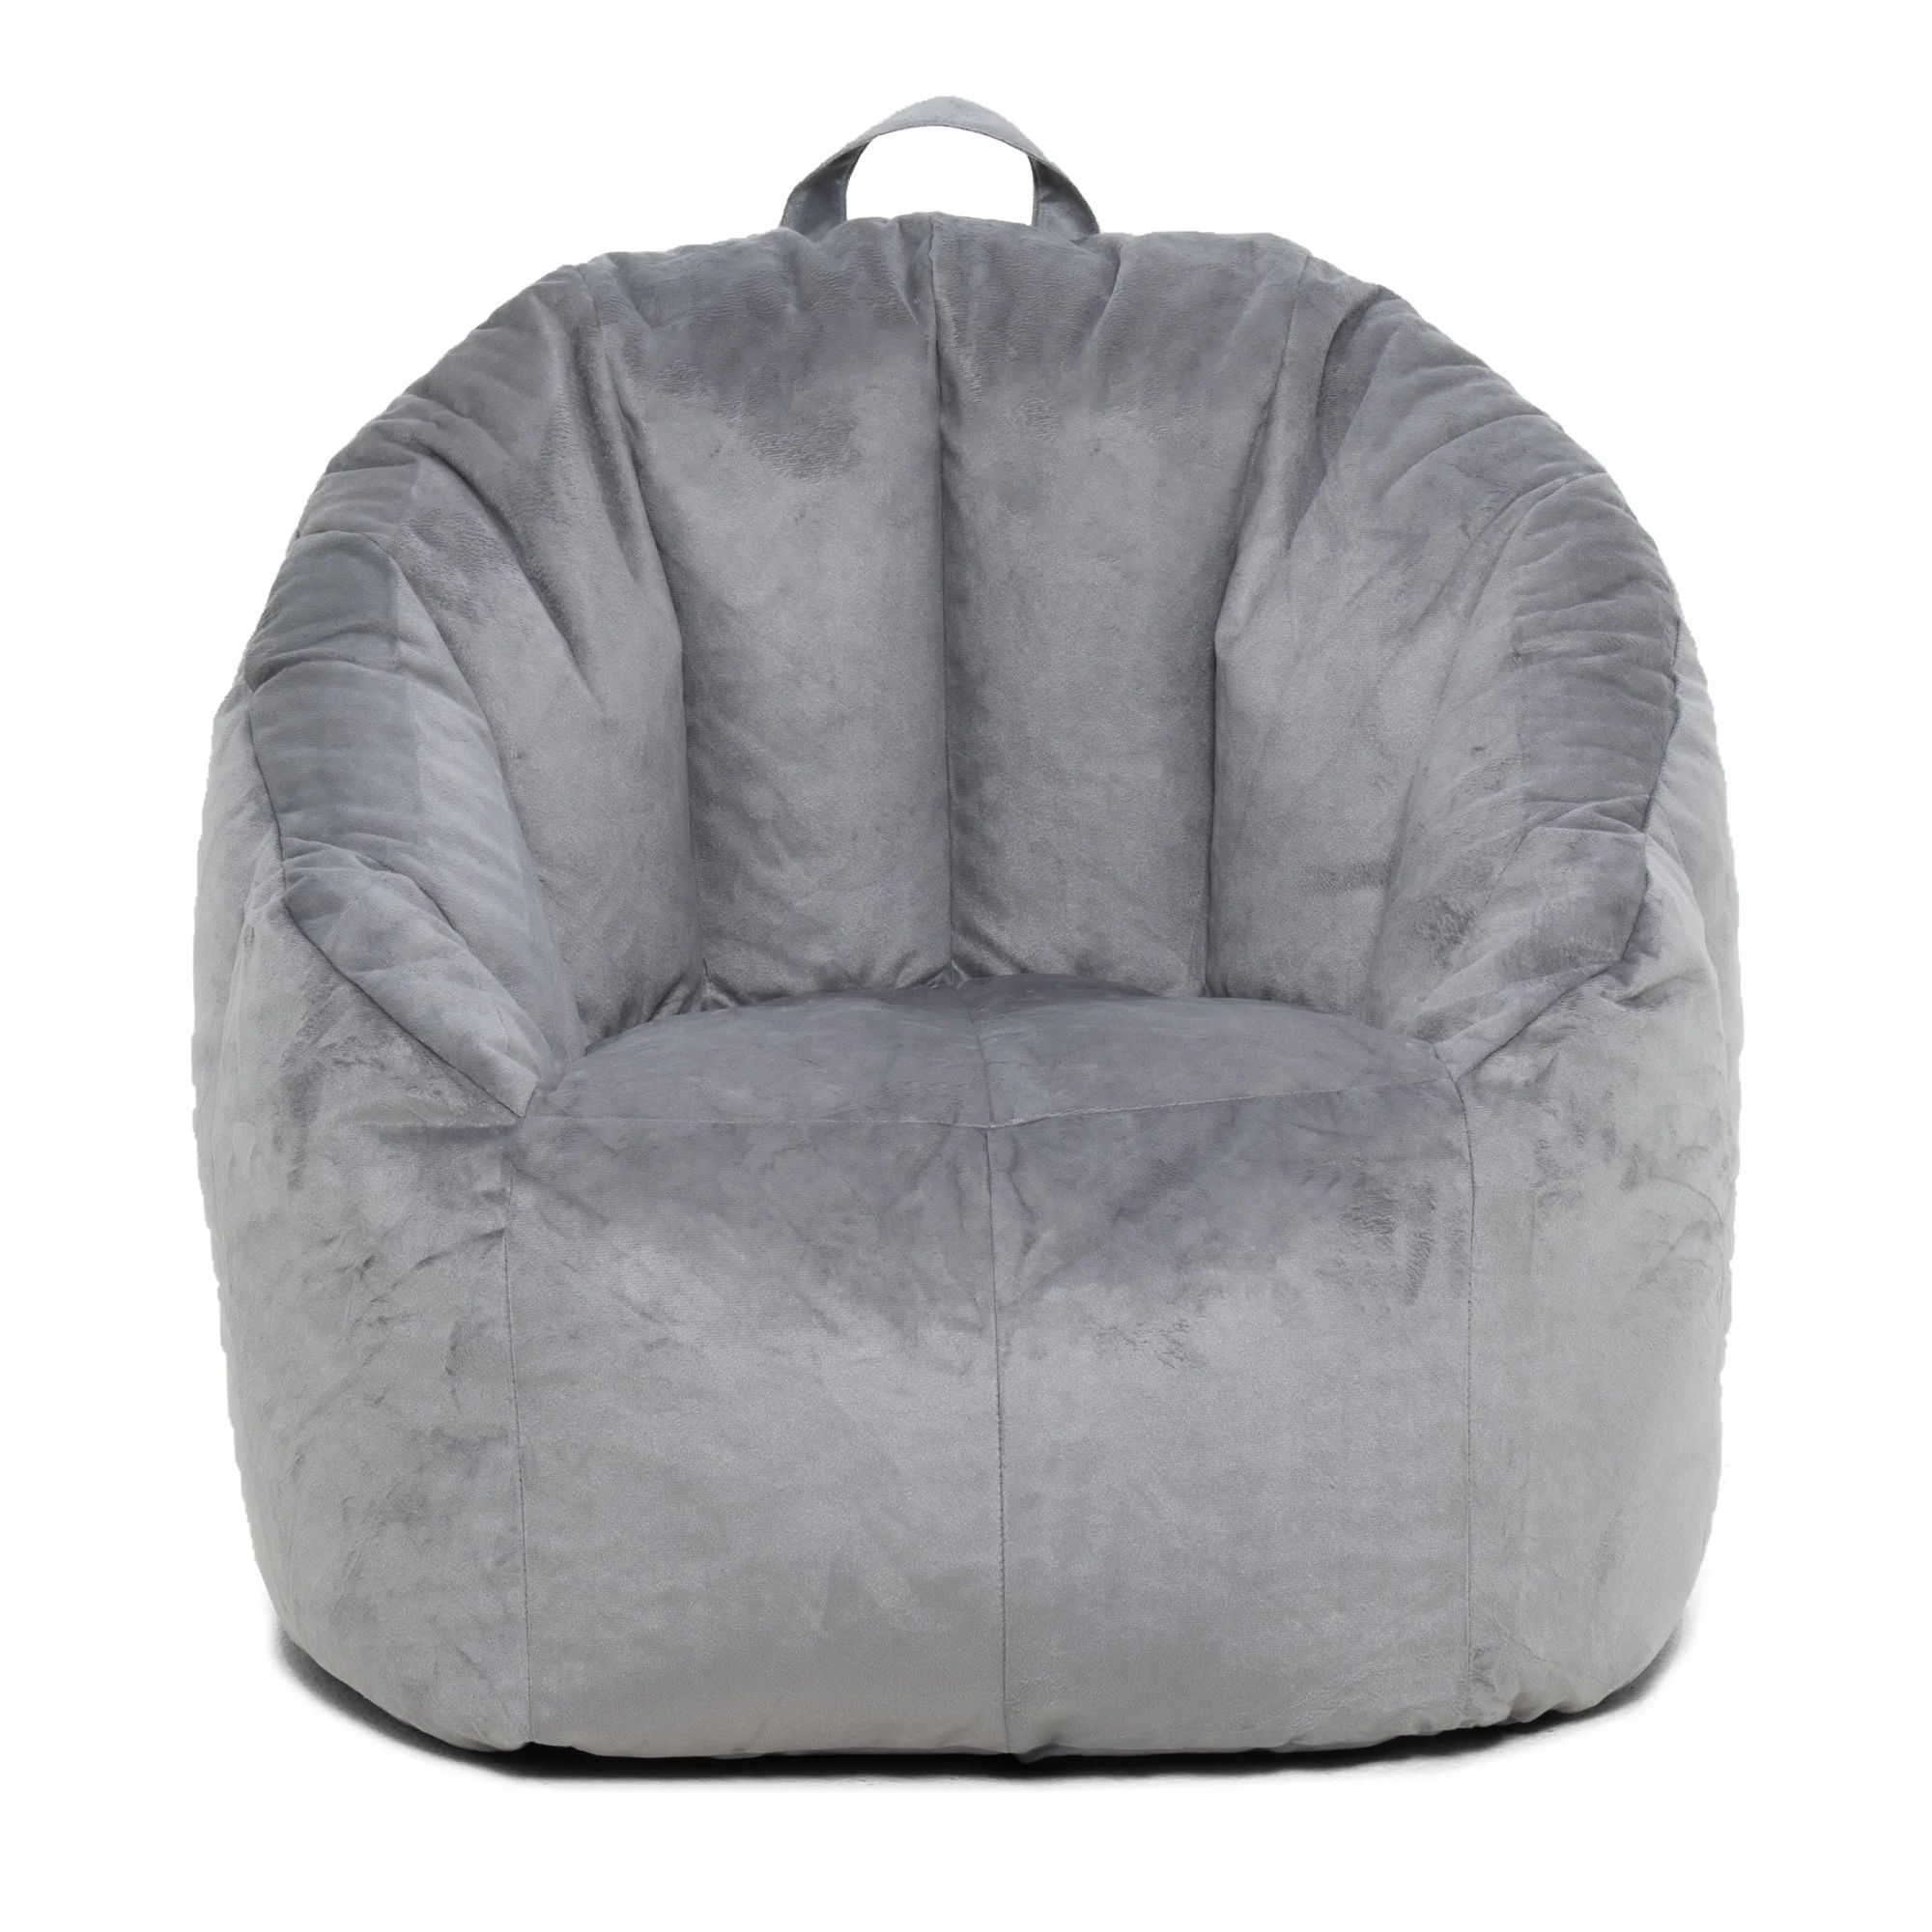 Big Joe Joey Bean Bag Chair, Plush, Kids/Teens, 2.5ft, Gray - Walmart.com | Walmart (US)